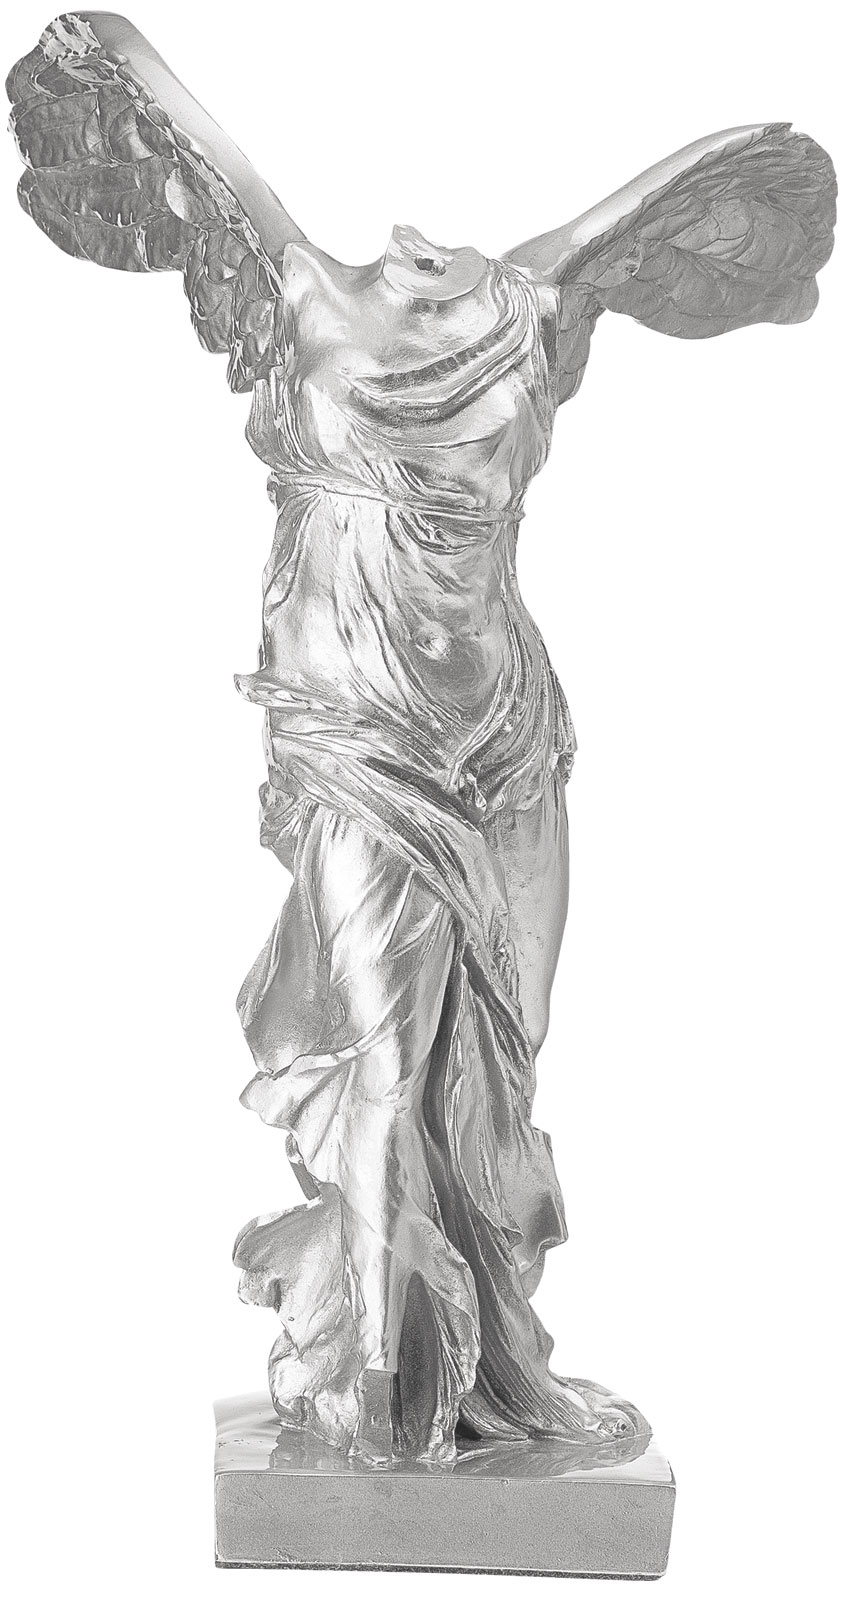 Skulptur "Nike von Samothrake", Kunstguss silber